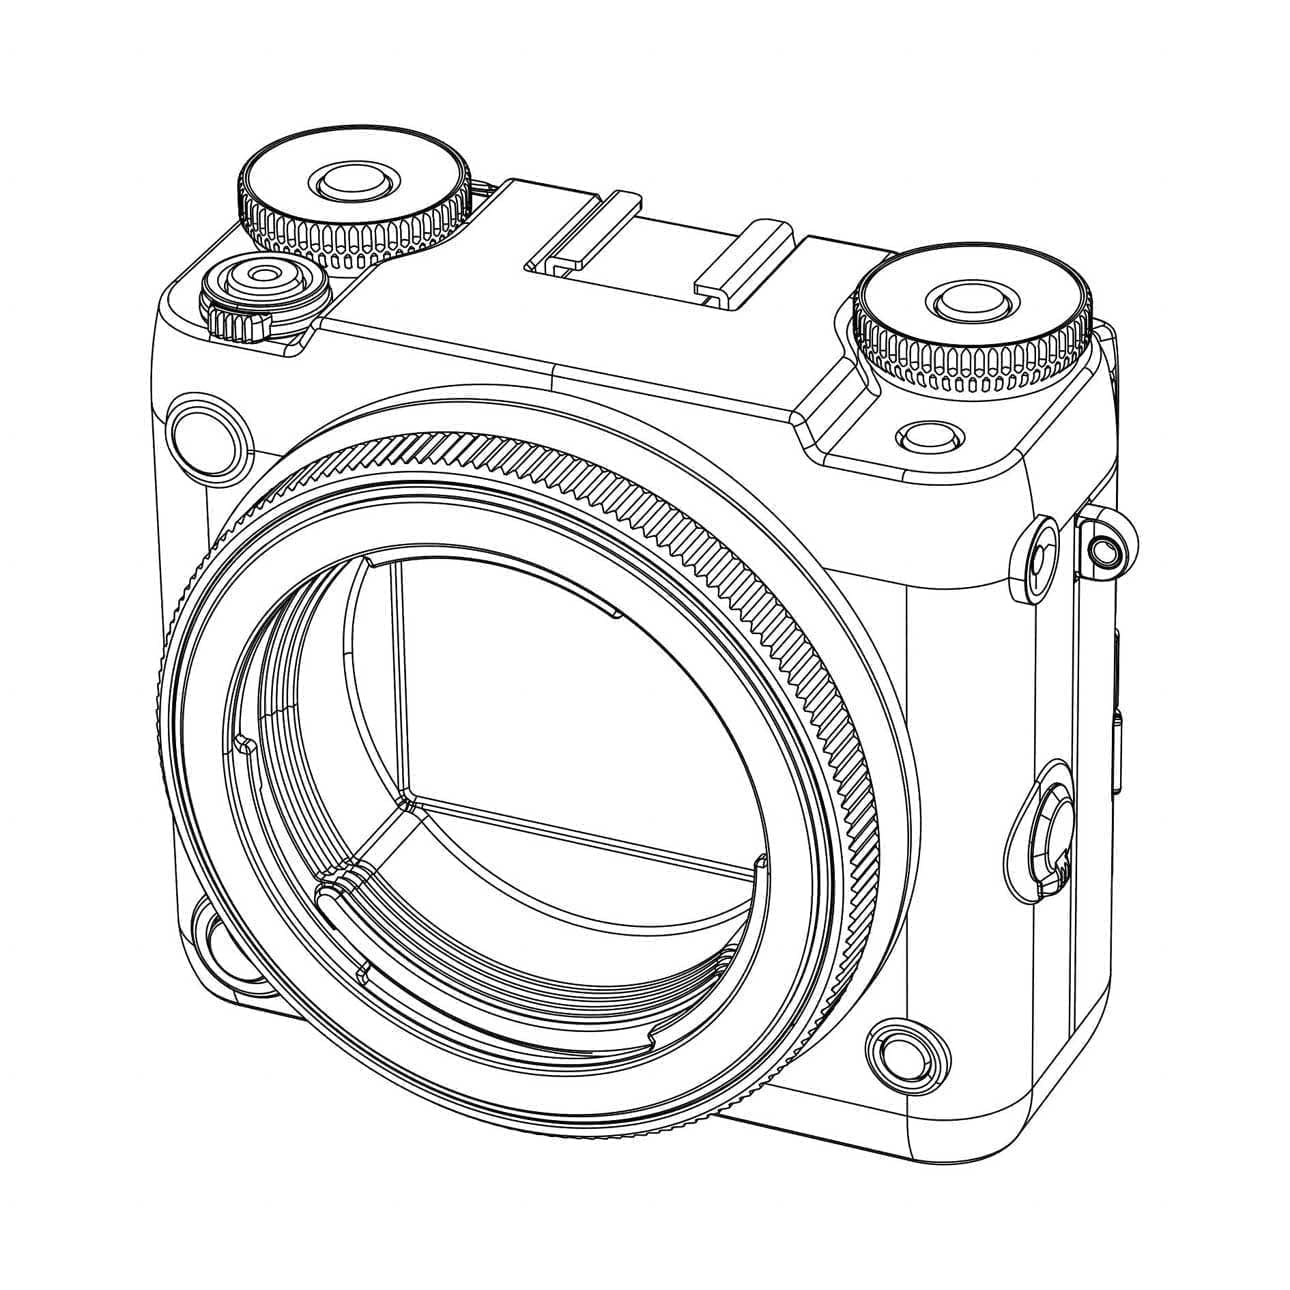 Is Fujifilm developing a budget modular GFX camera?